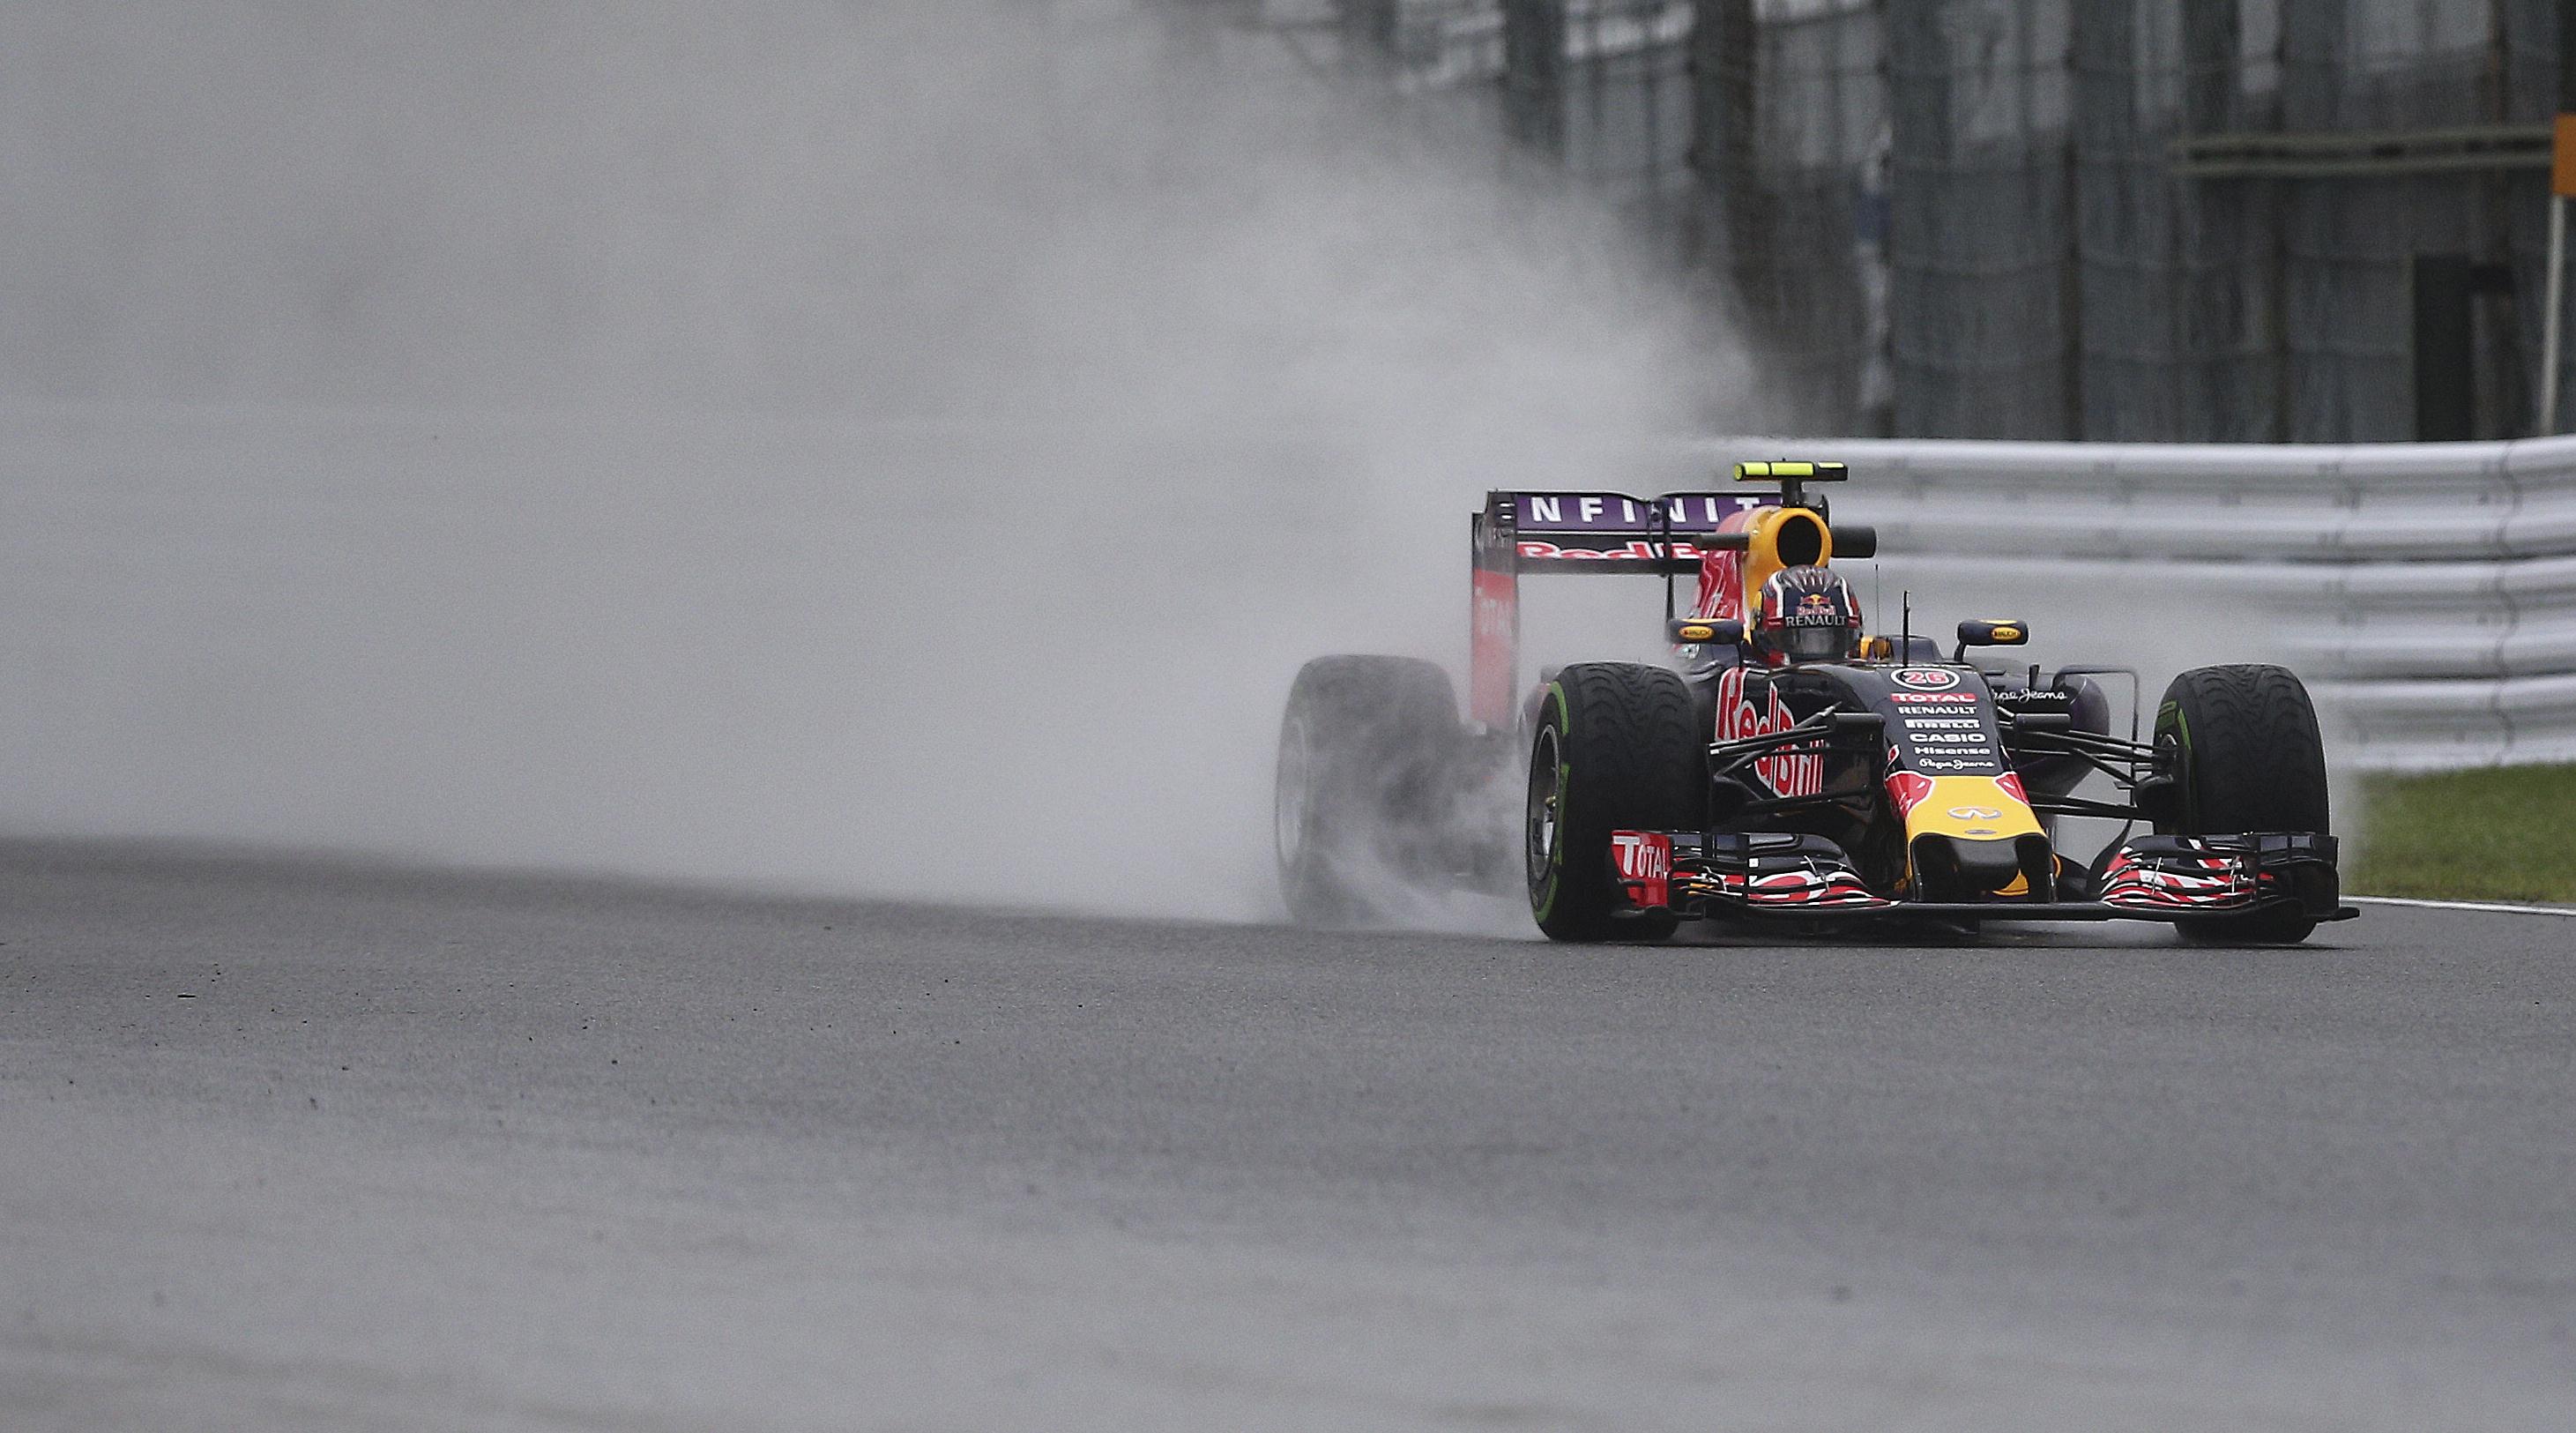  Formula One Grand Prix at the Suzuka Circuit on Friday. Source: AP